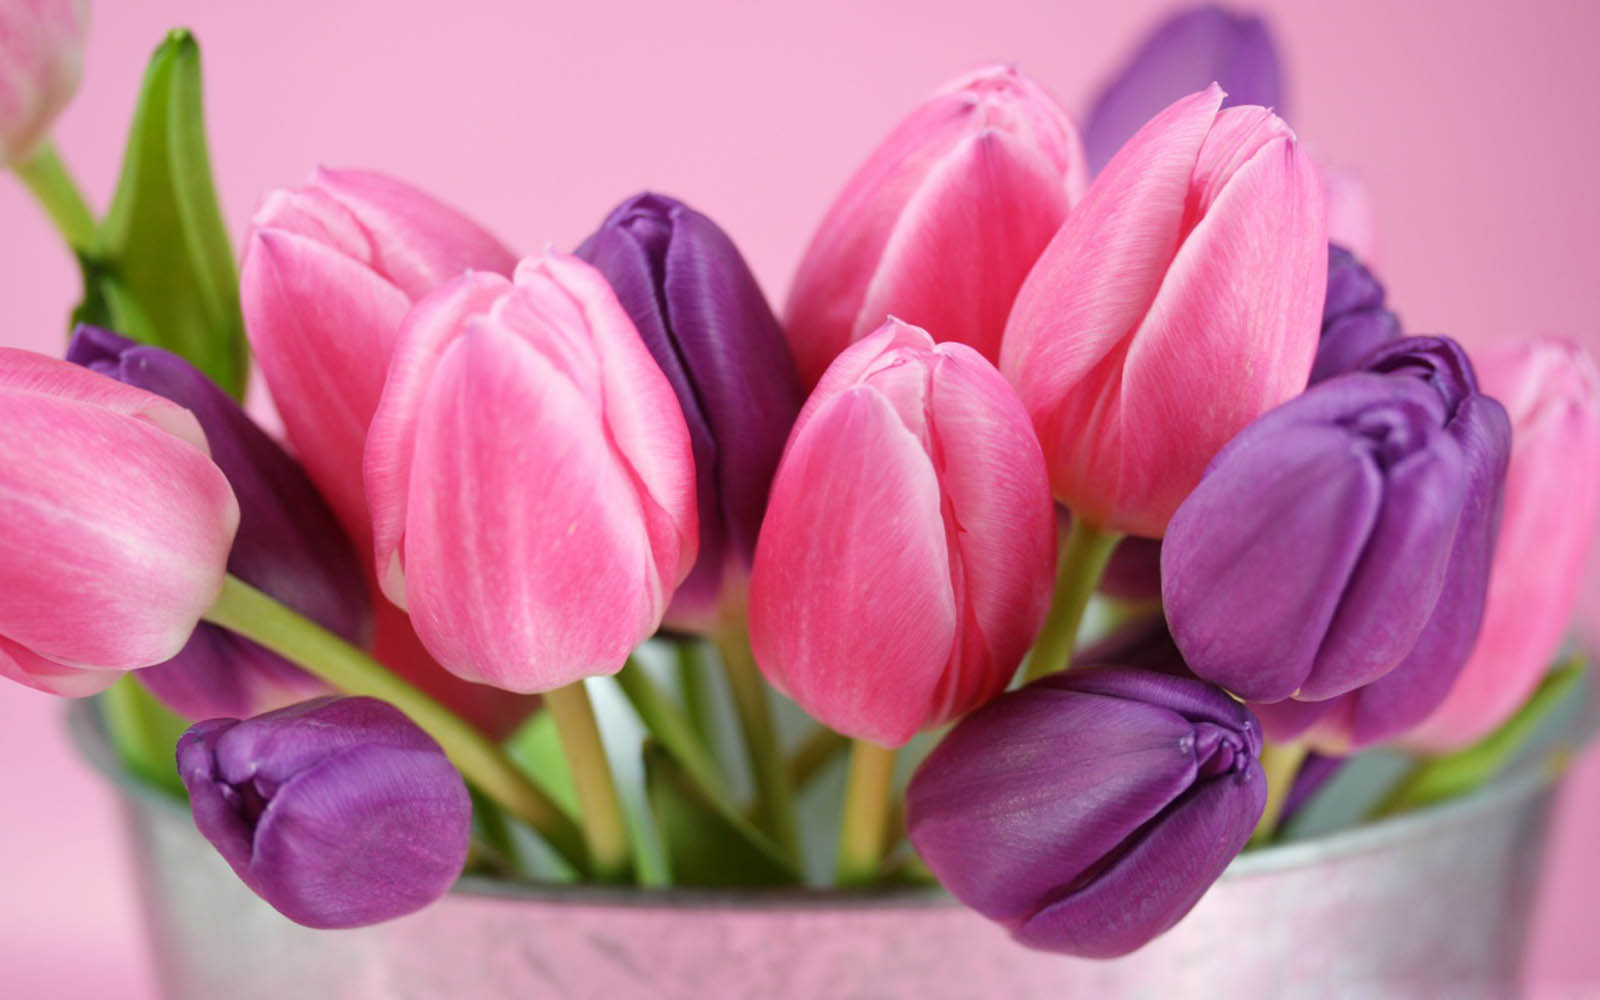 tulip flowers images